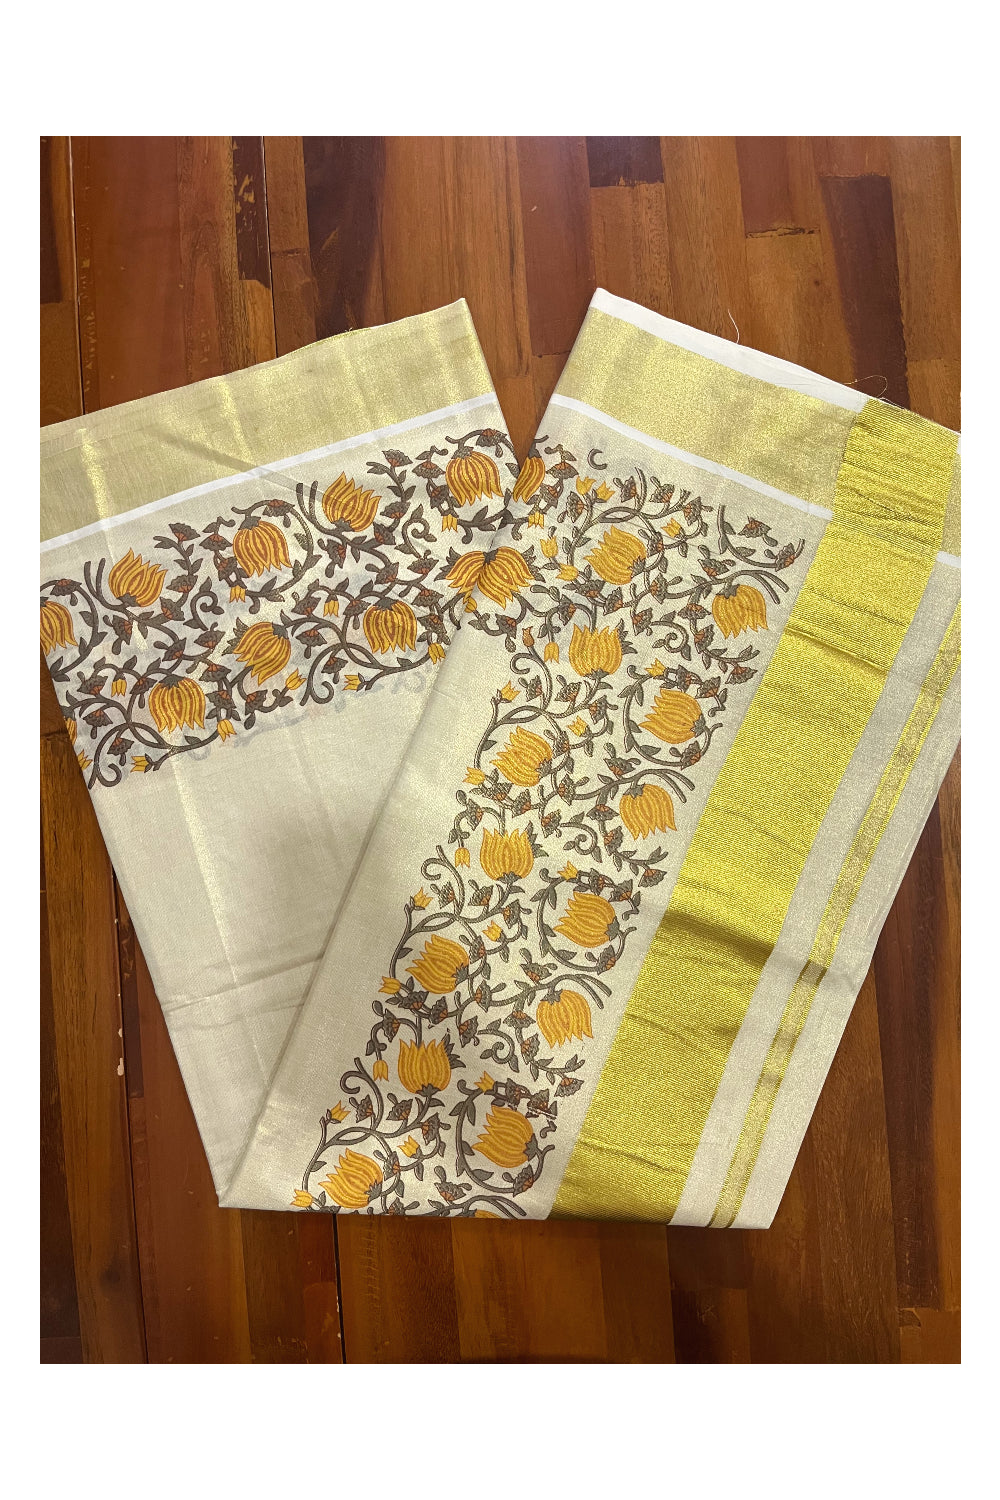 Southloom Jaipur Artisans & Kerala Weavers Collab Yellow and Grey Floral Printed Tissue Kasavu Saree